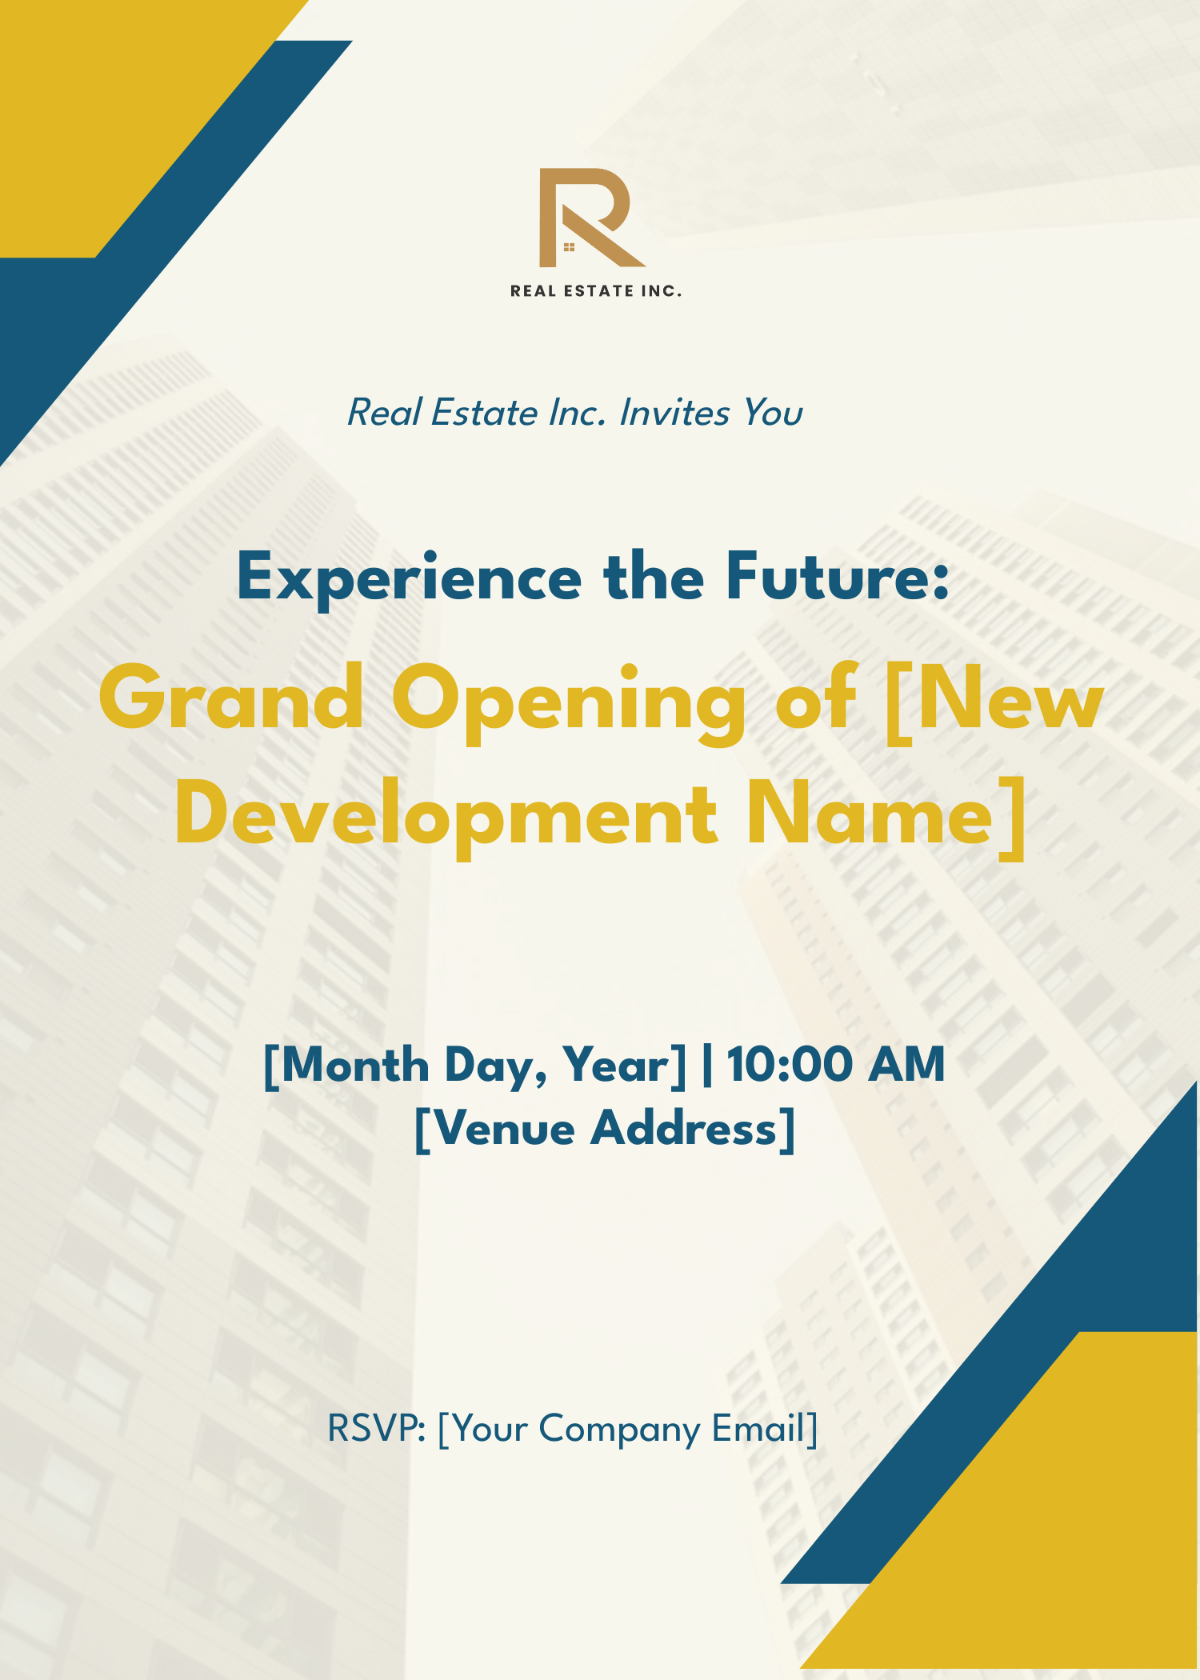 Grand Opening of New Development Invitation Card